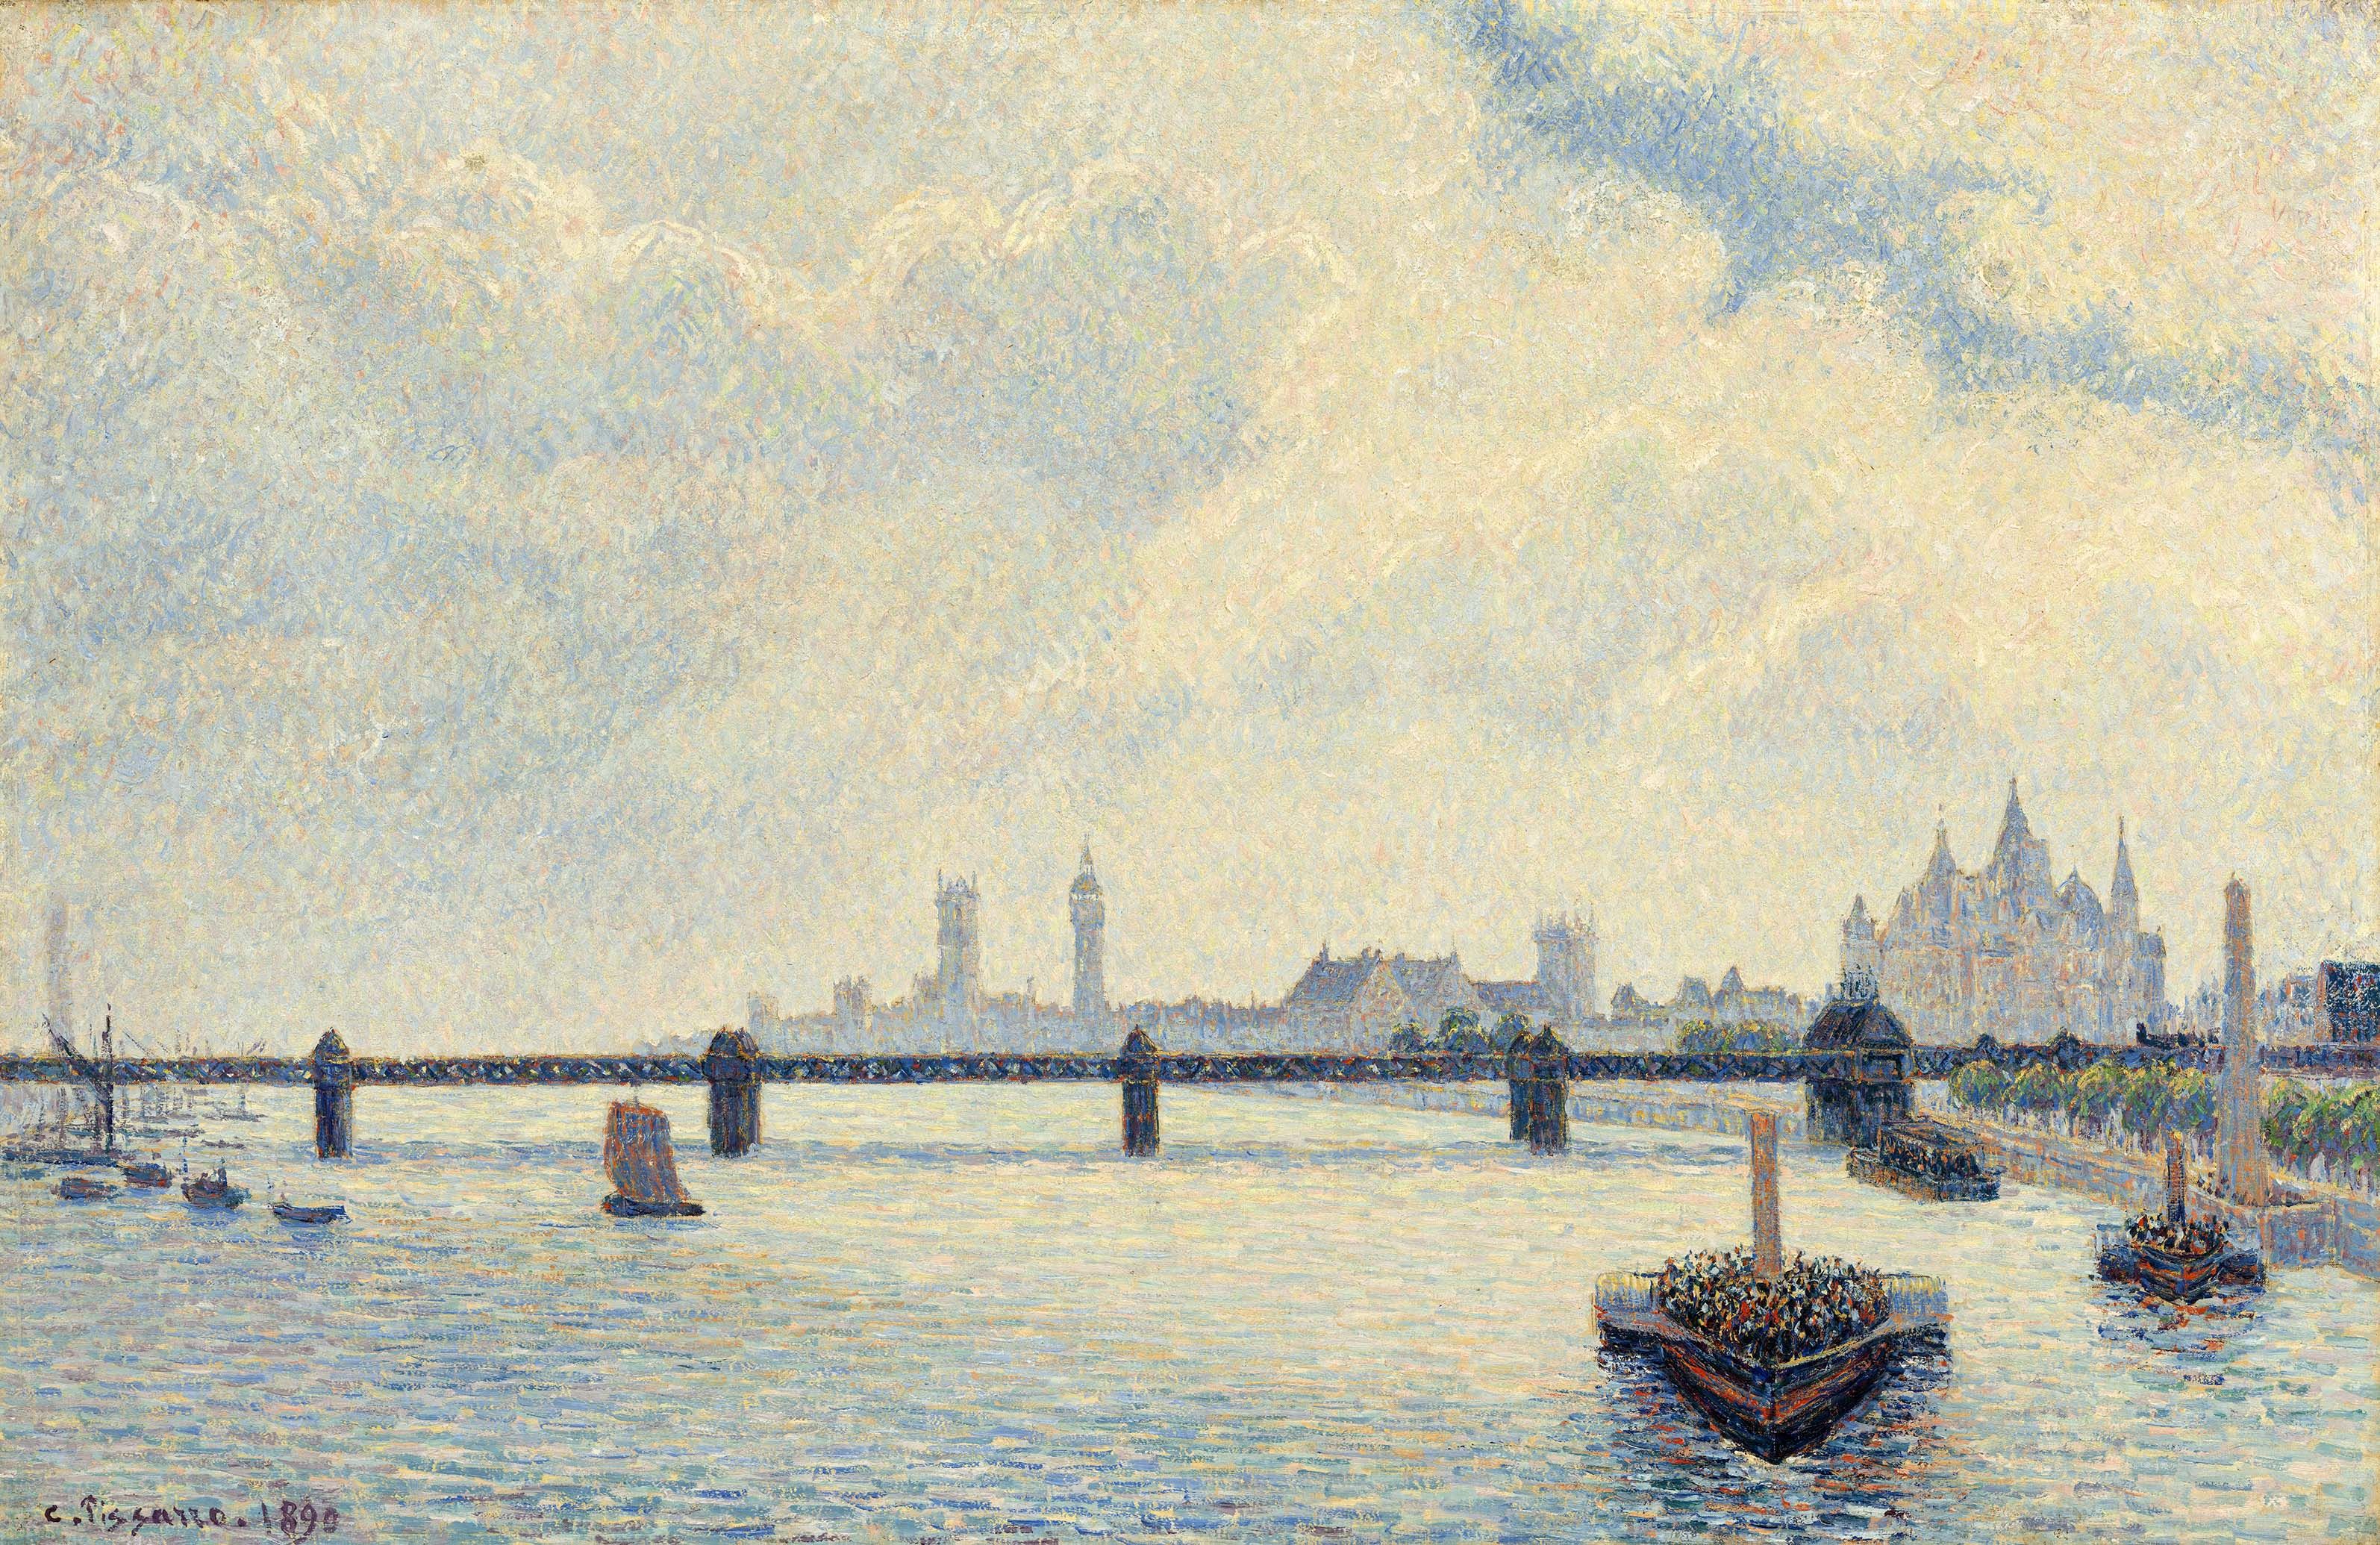 Camille Pissarro Charing Cross Bridge 1890 Oil paint on canvas 600 x 924 mm National Gallery of Art (Washington, USA)